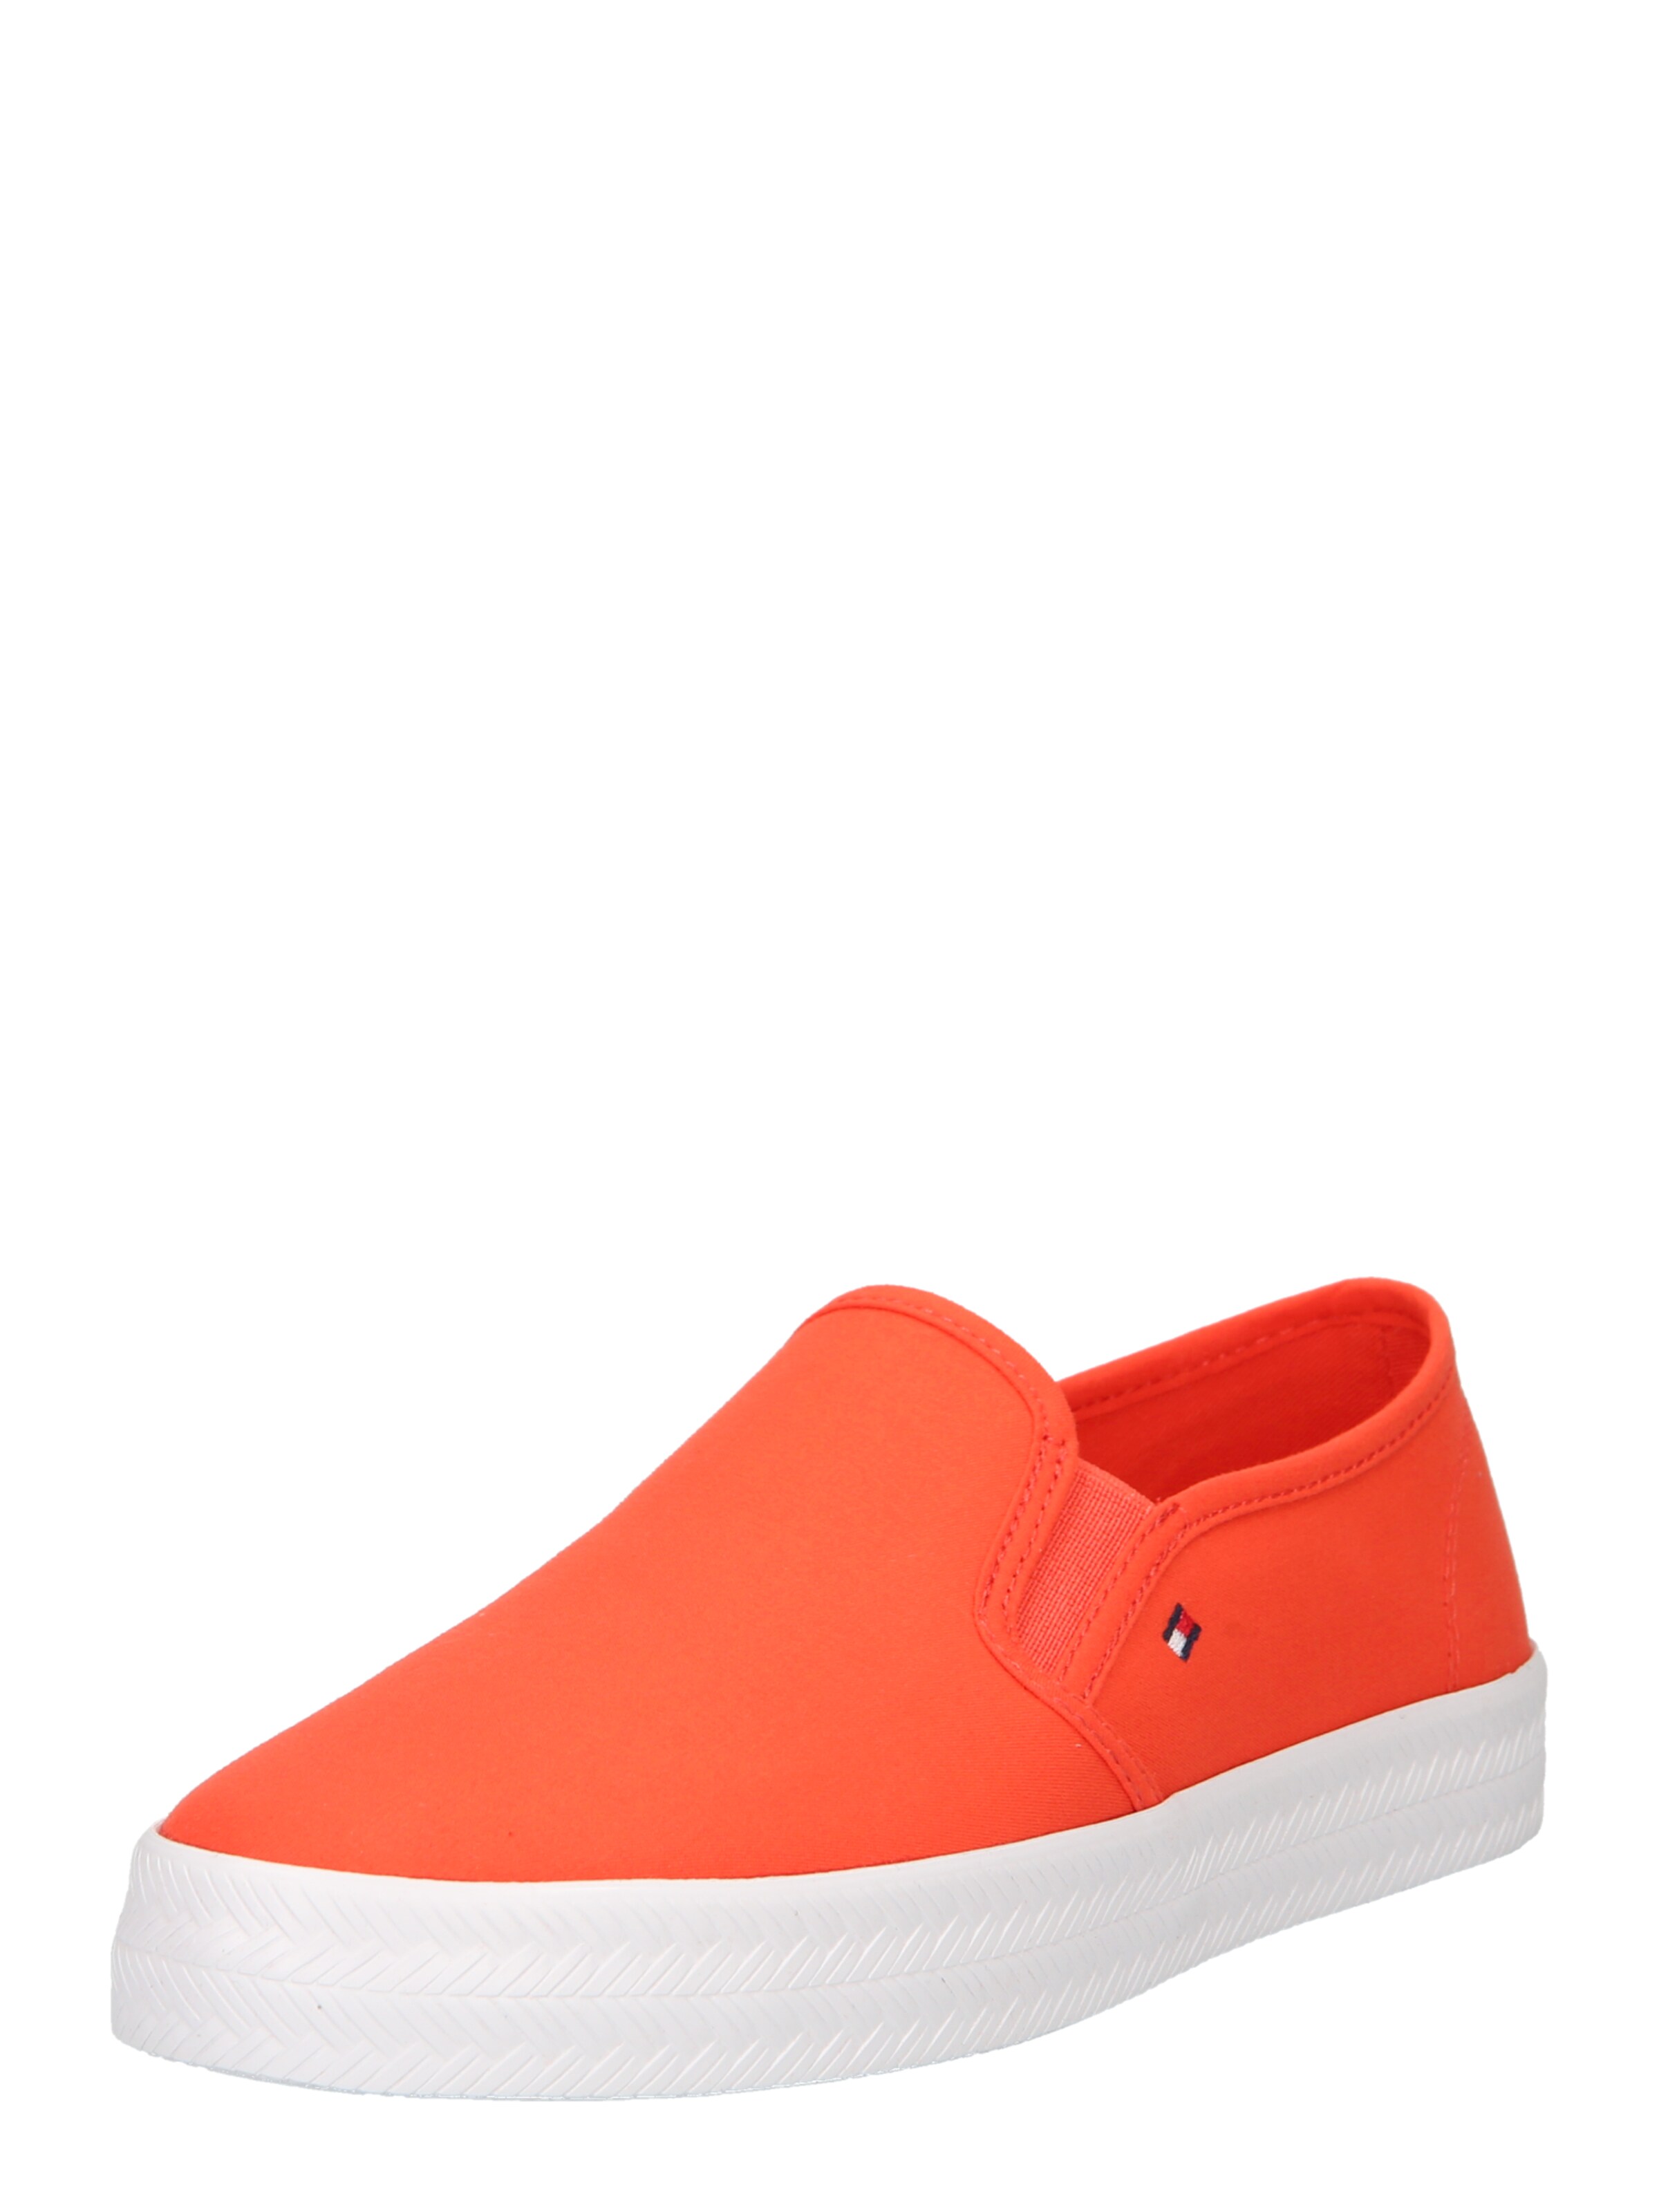 SALE%%% rot-weiß CITYWALK Slip-On Sneaker-Boots NEU!! 